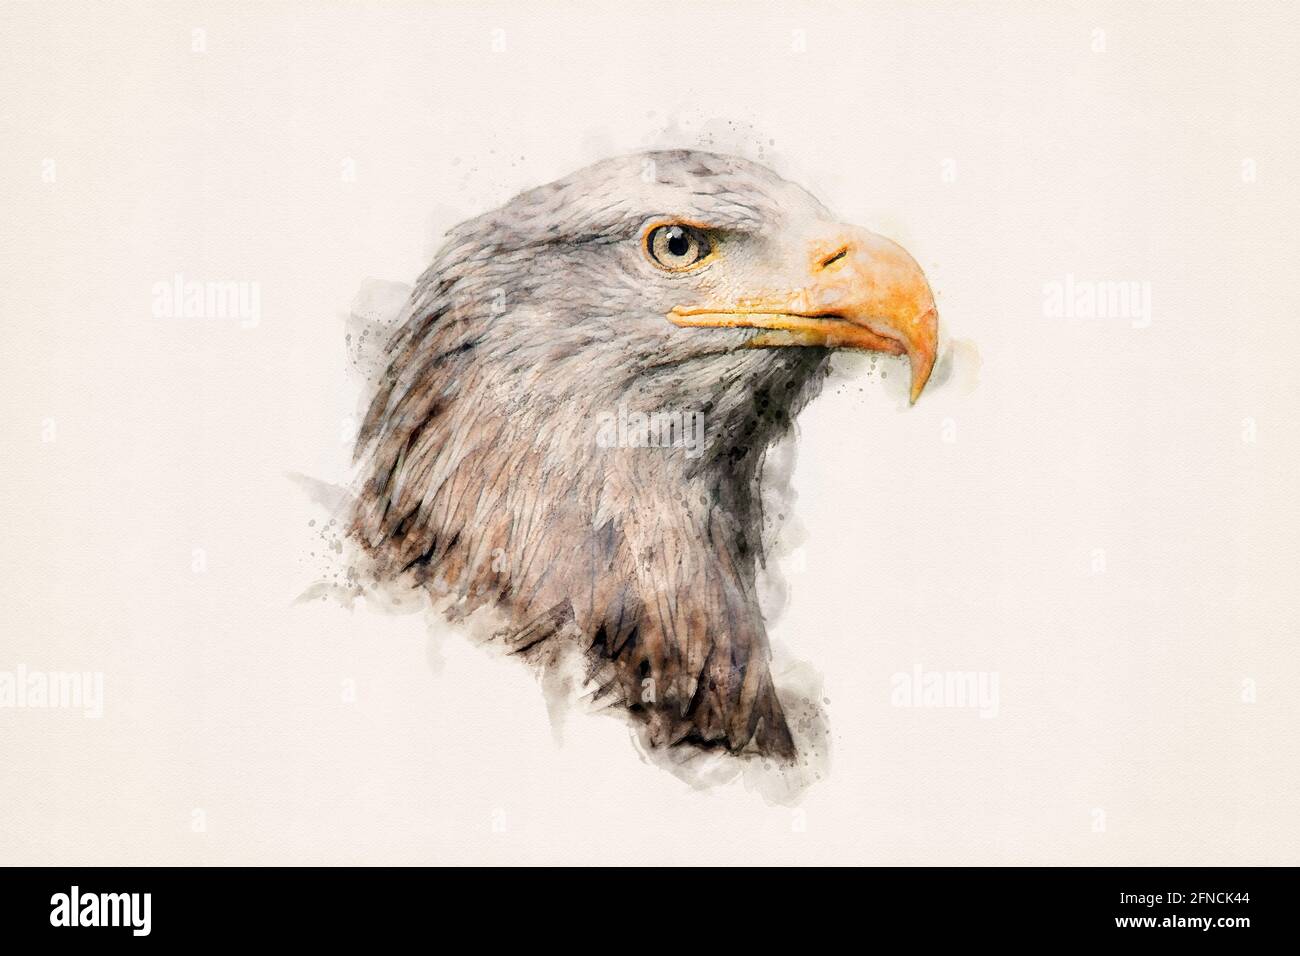 Porträt eines Adlers. Seeadler, Seeadler. Greifvögel, isoliert. Aquarelle, Aquarell-Illustration. Stockfoto